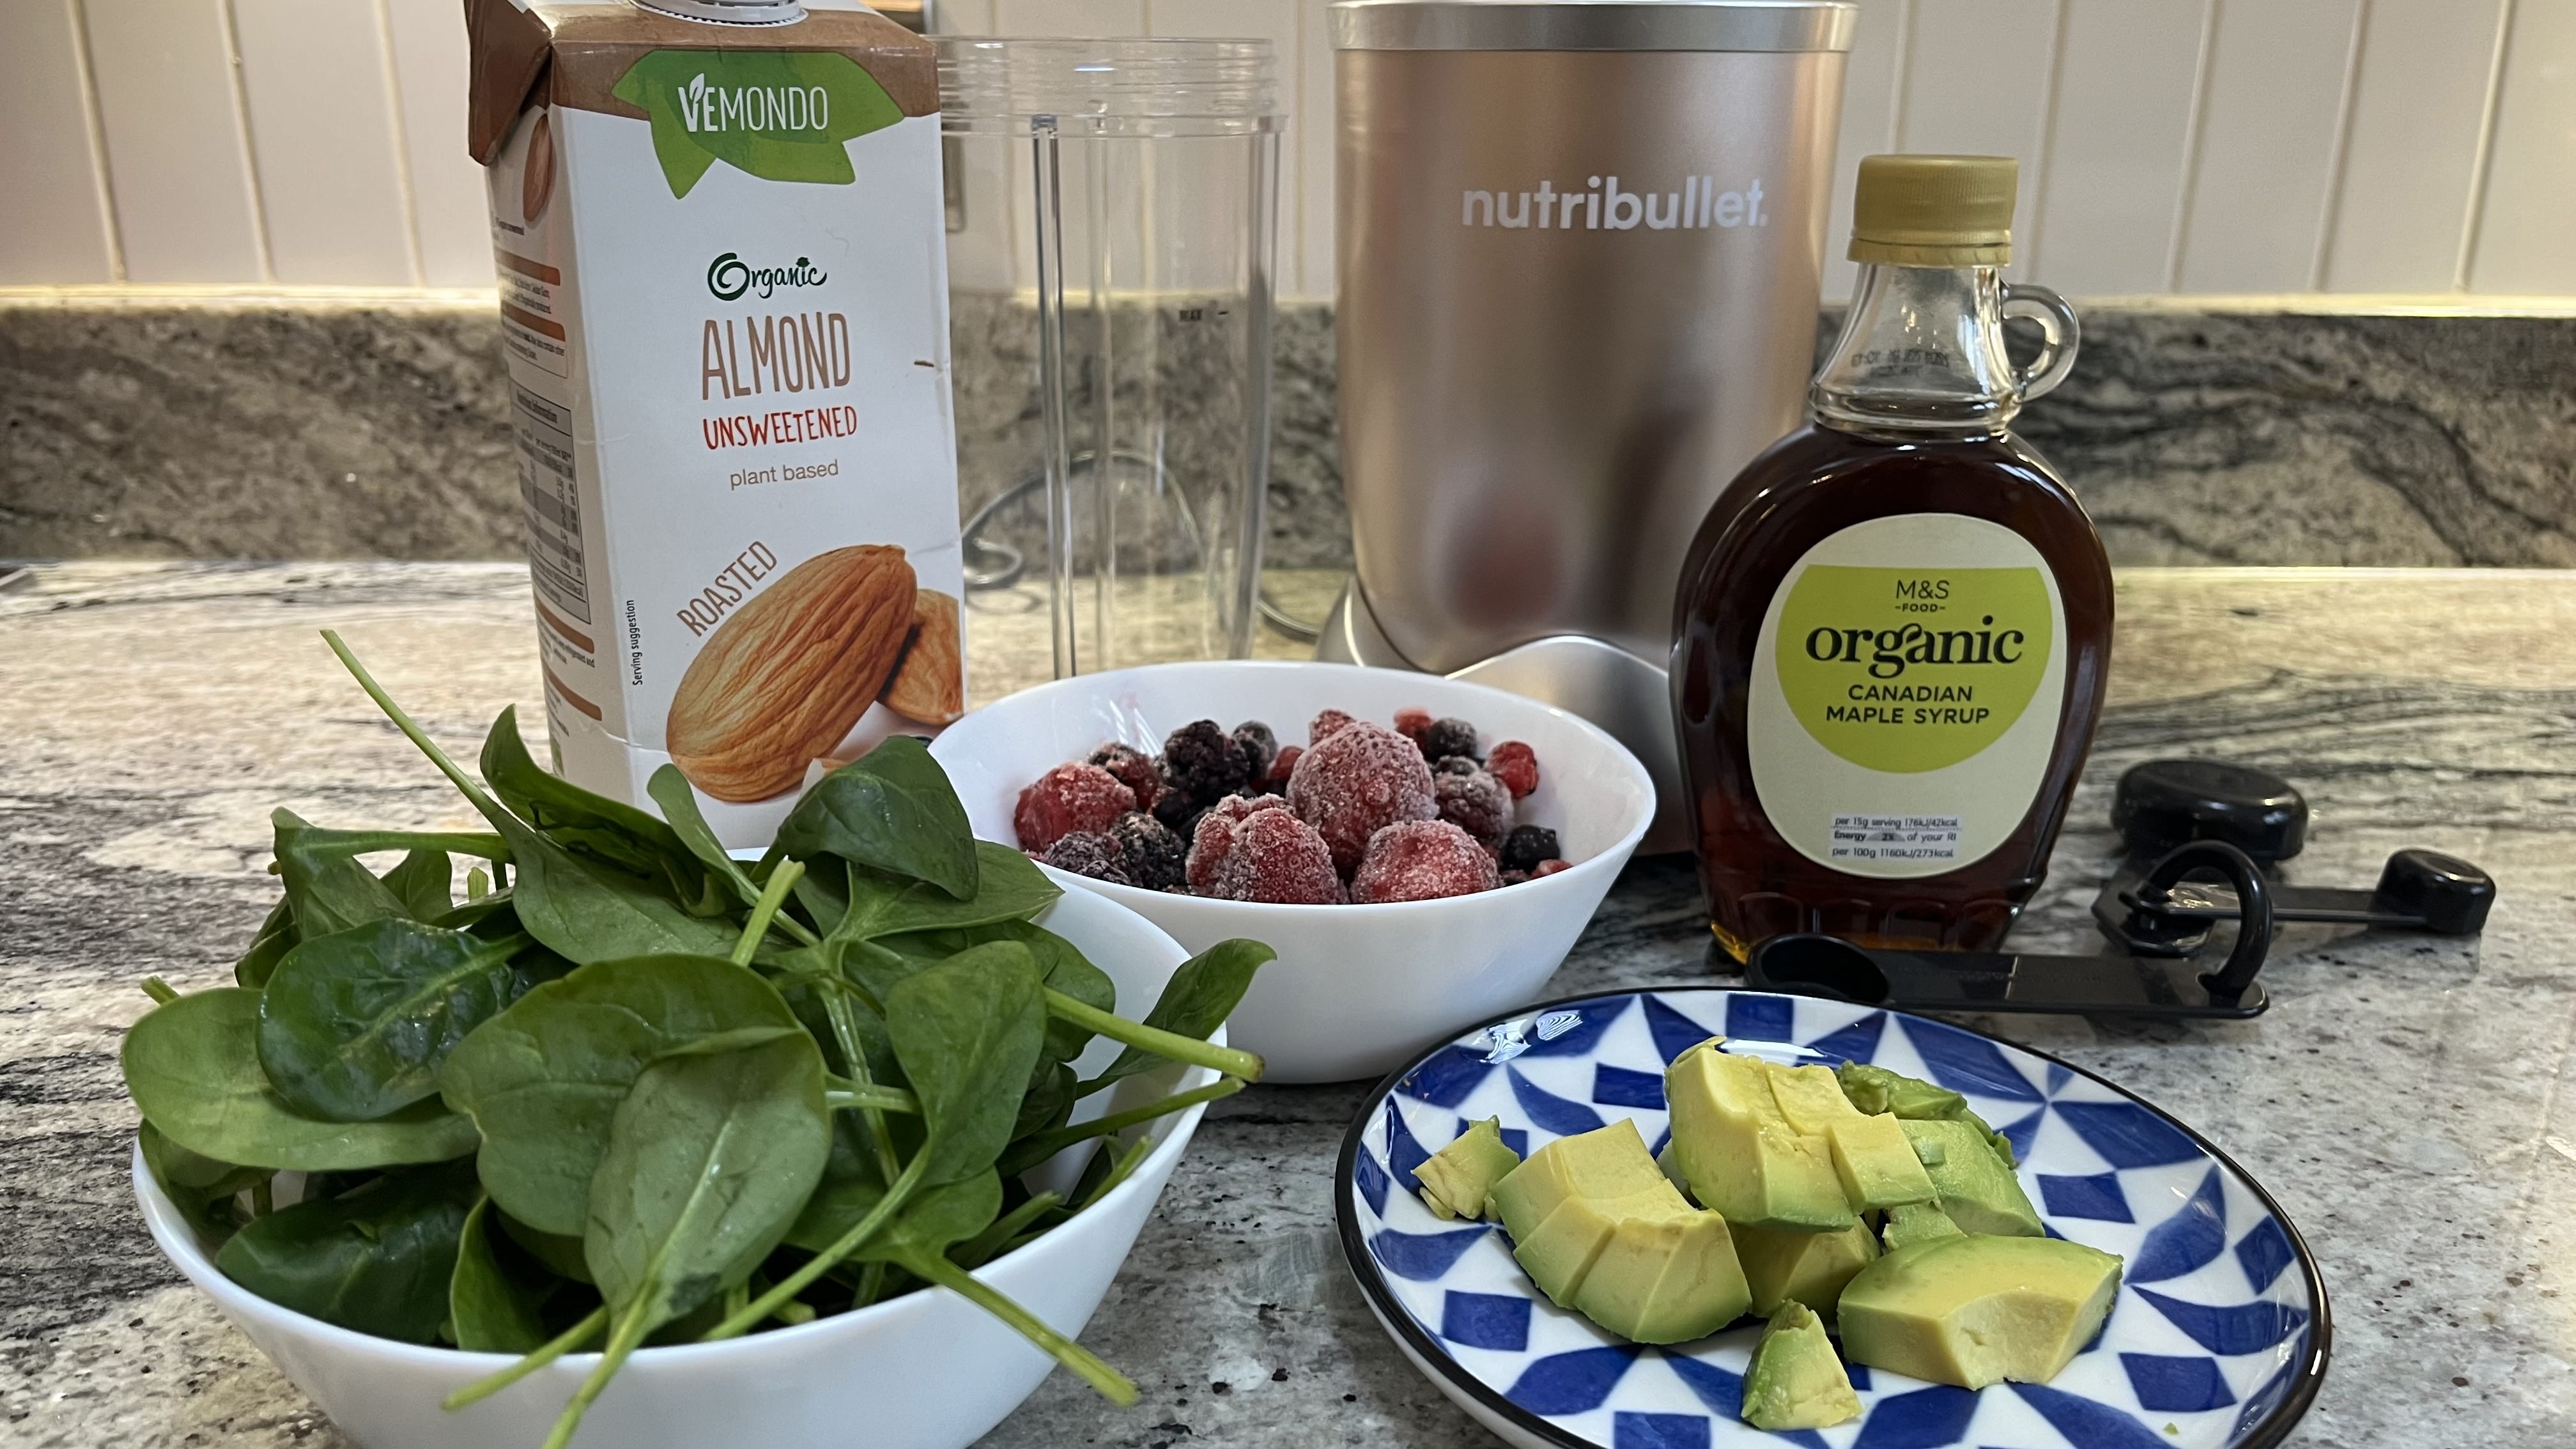 Nutribullet Pro 900 berry smoothie ingredients